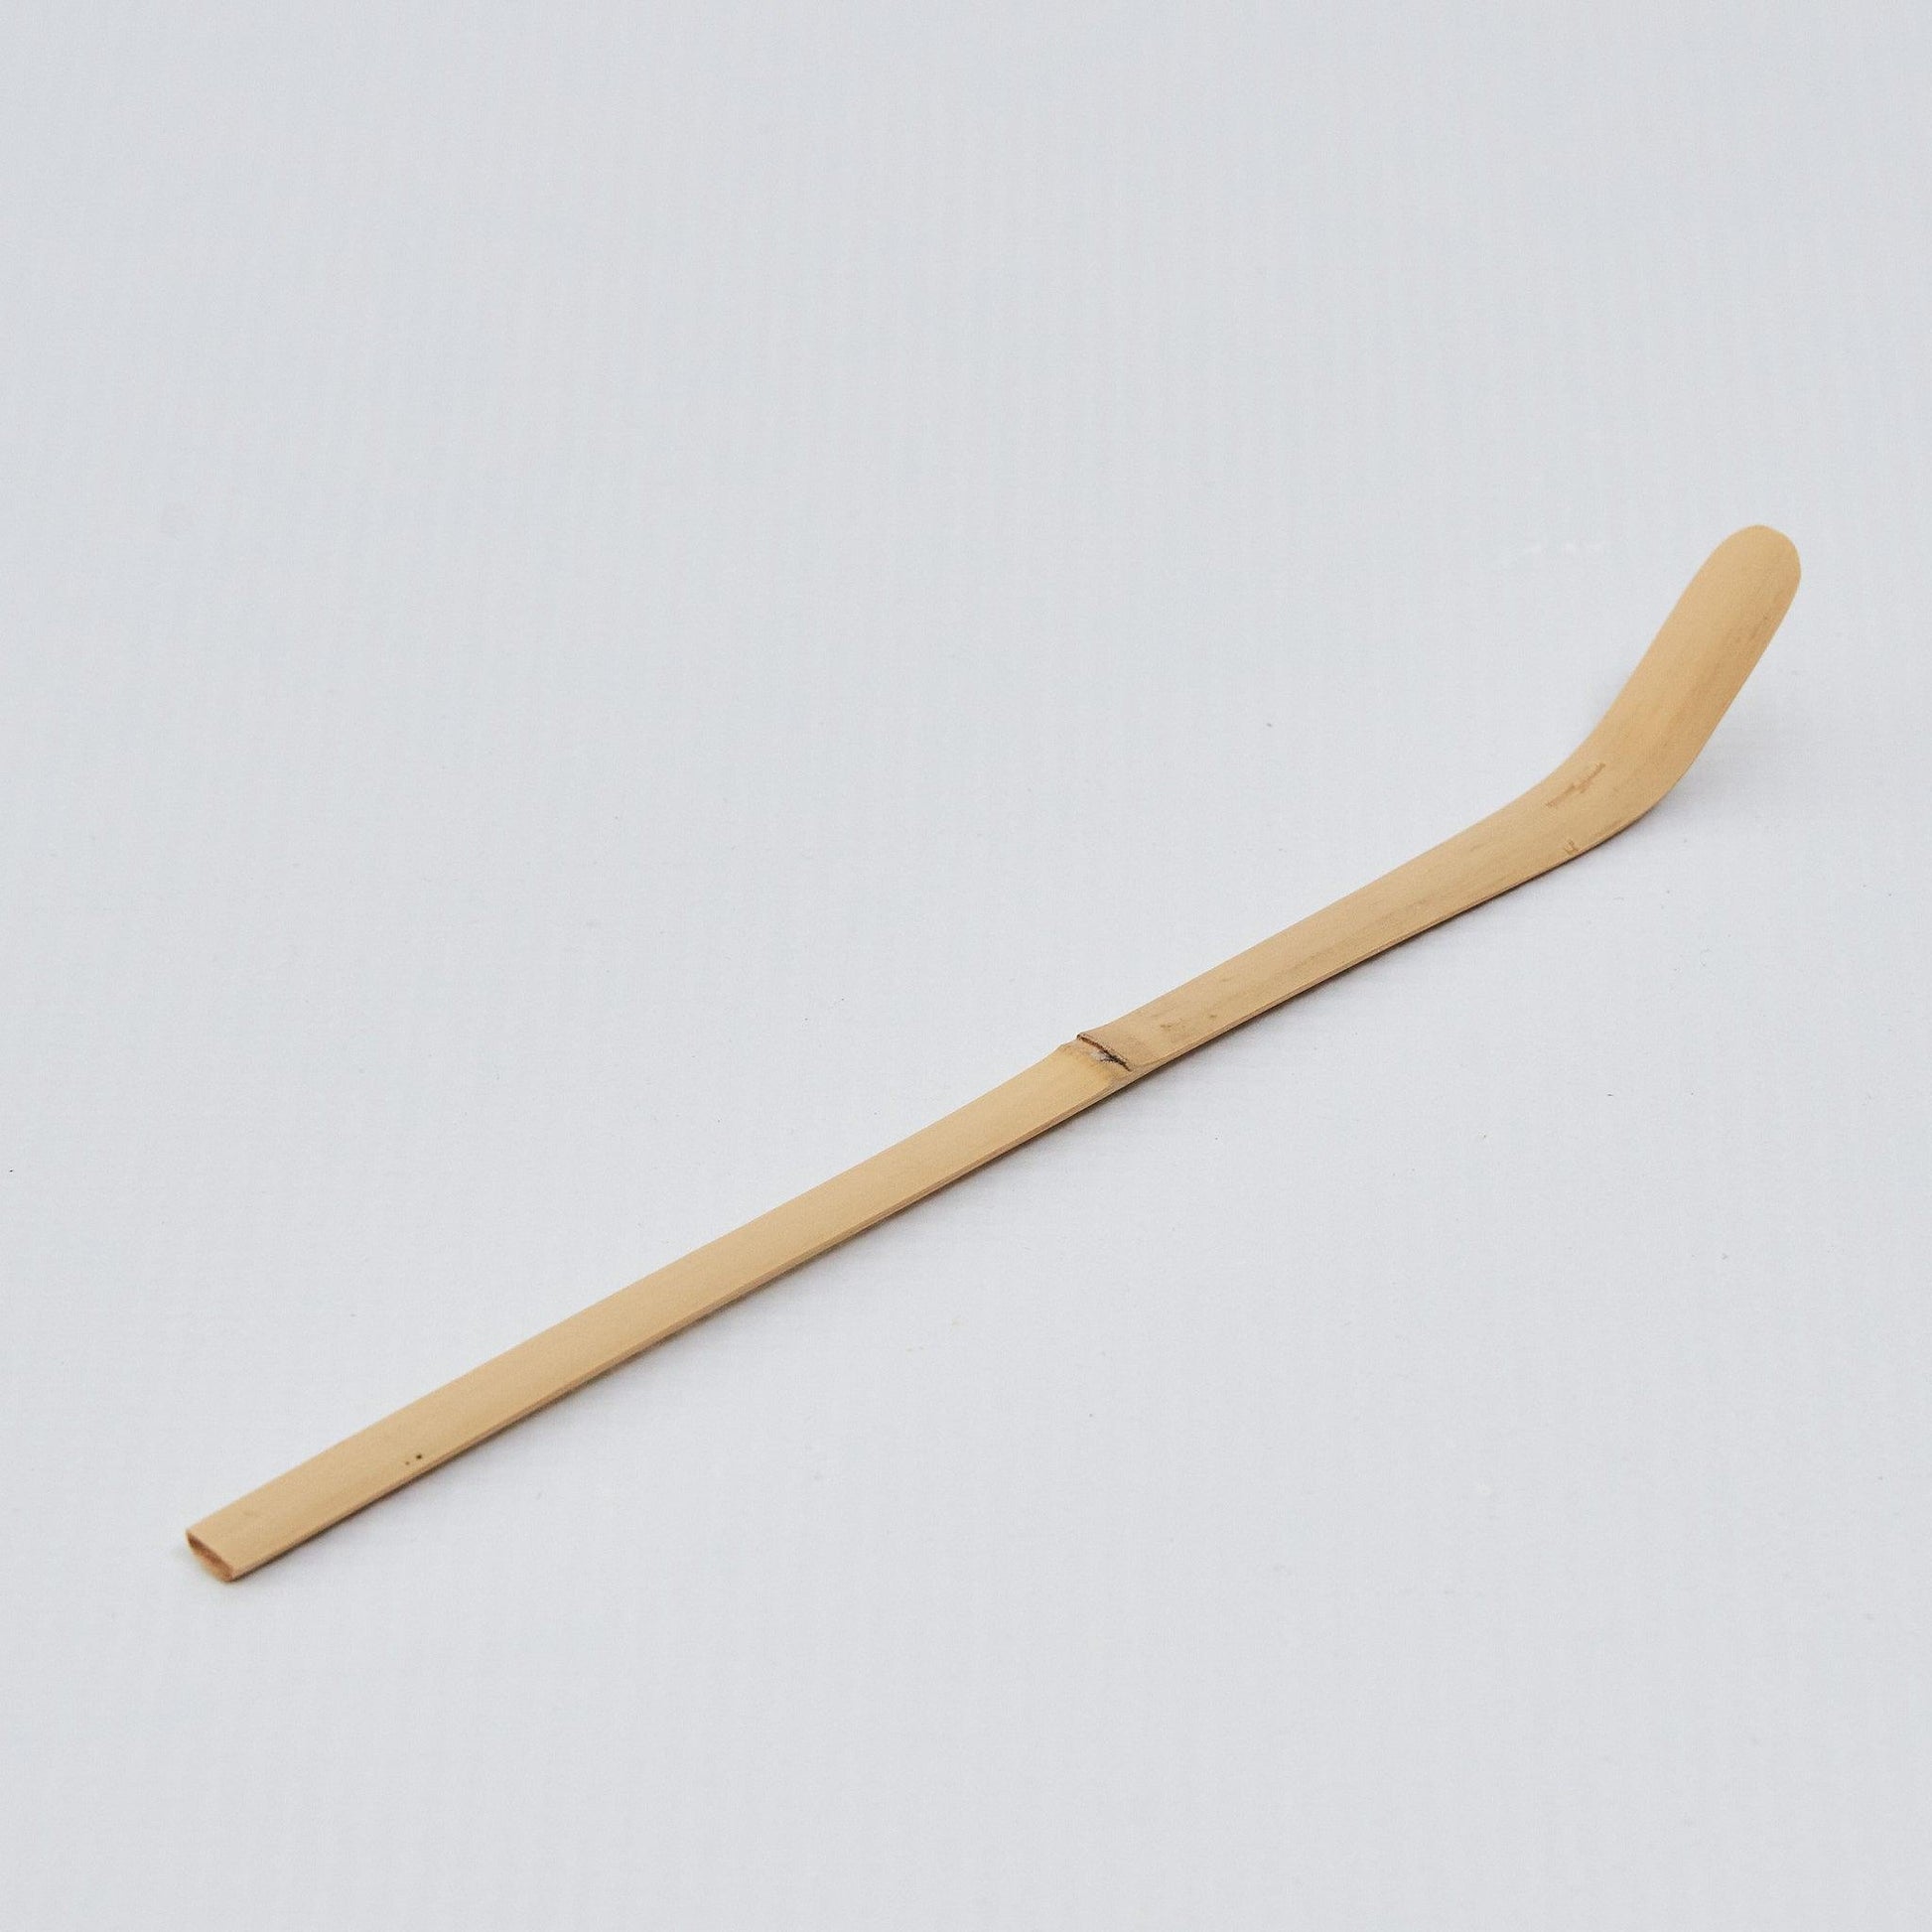  Matchadna Bamboo Matcha Tea Whisk Small Spoon